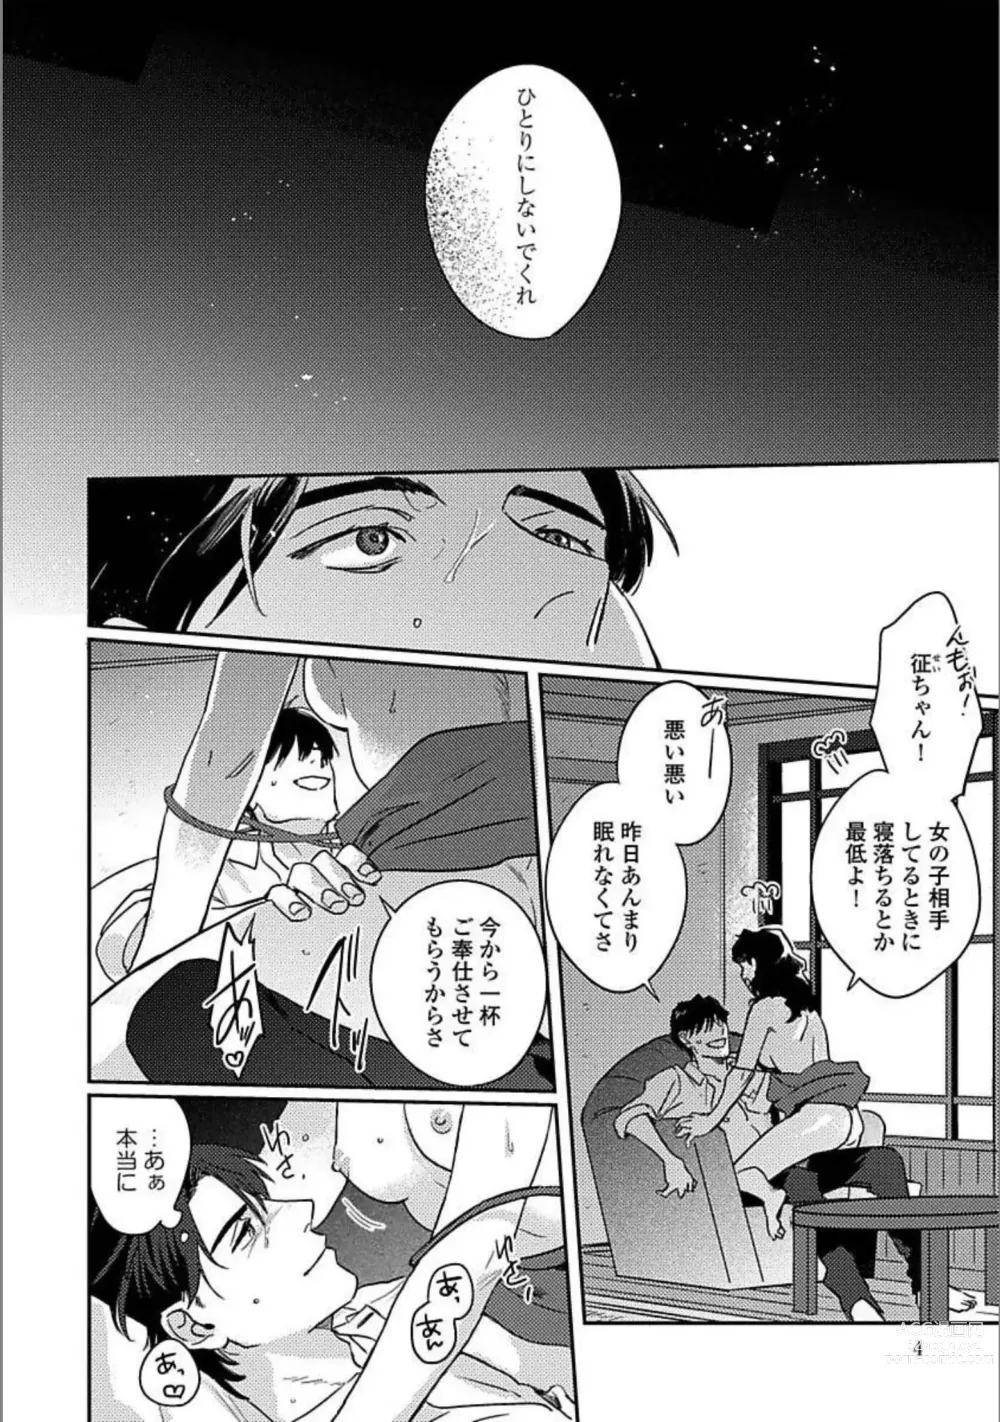 Page 5 of manga Hitori de Yoru wa Koerarenai - I Cant Stand Another Night Alone